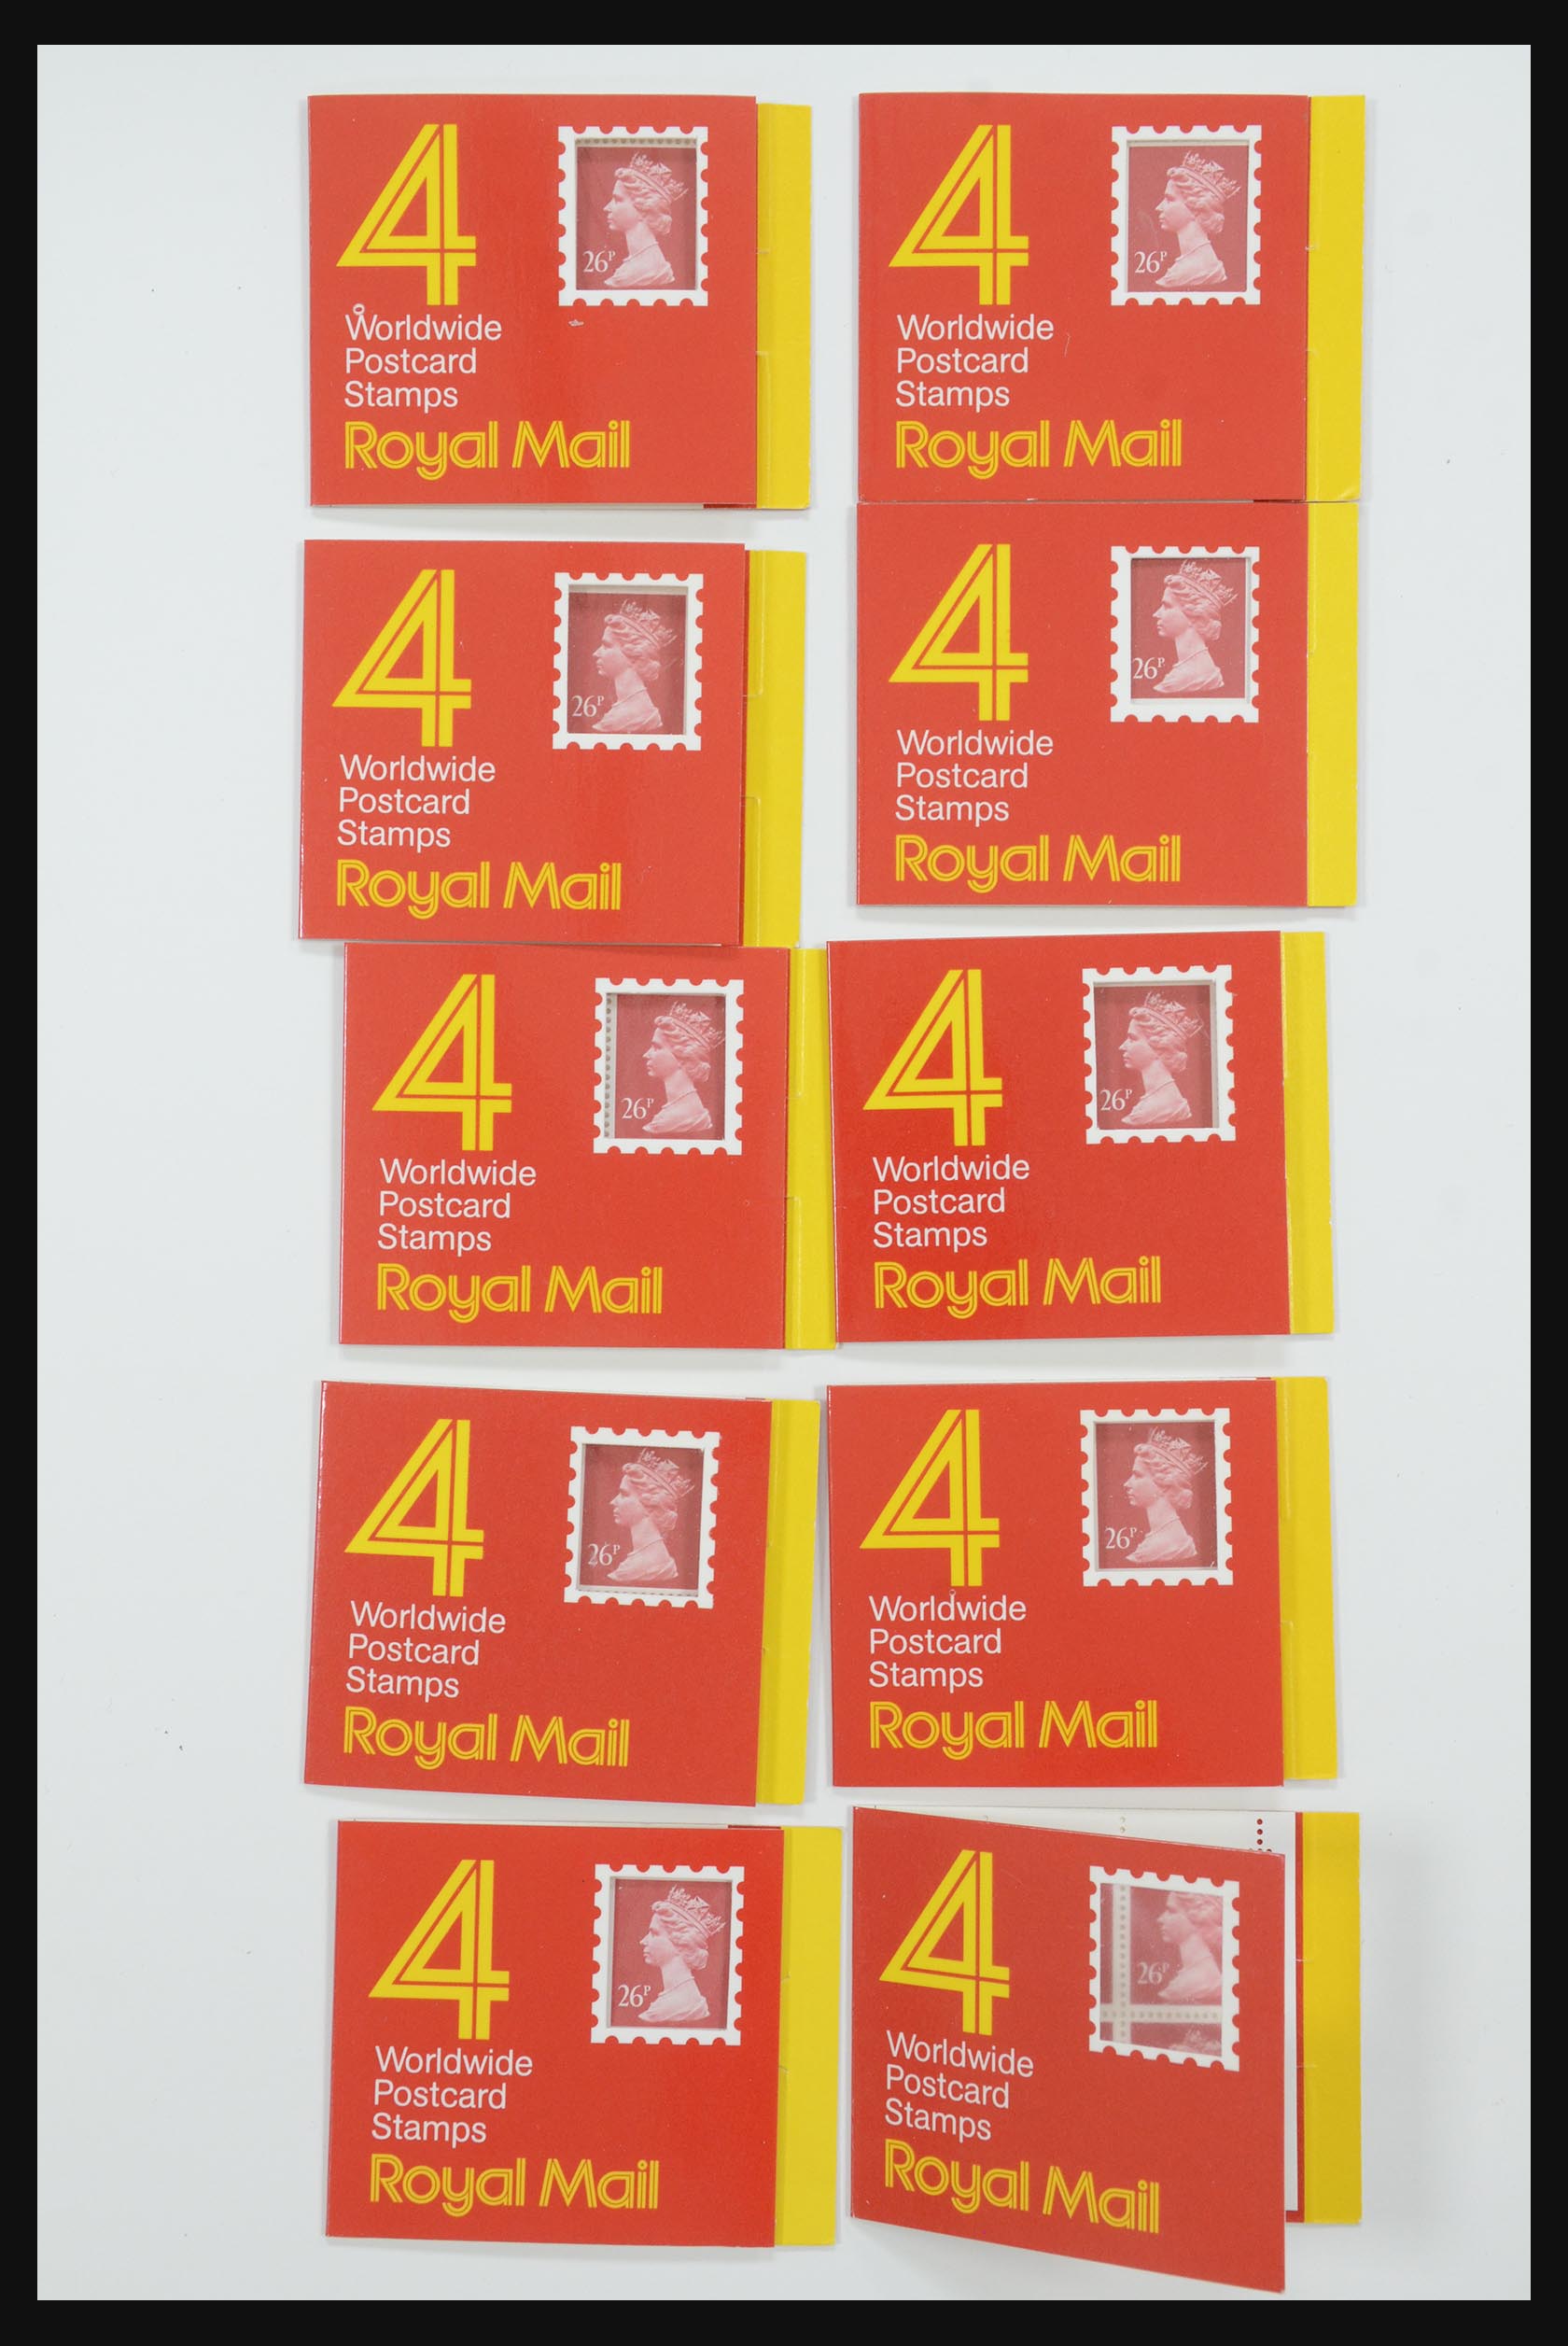 31961 070 - 31961 Great Britain stampbooklets 1971-1999.